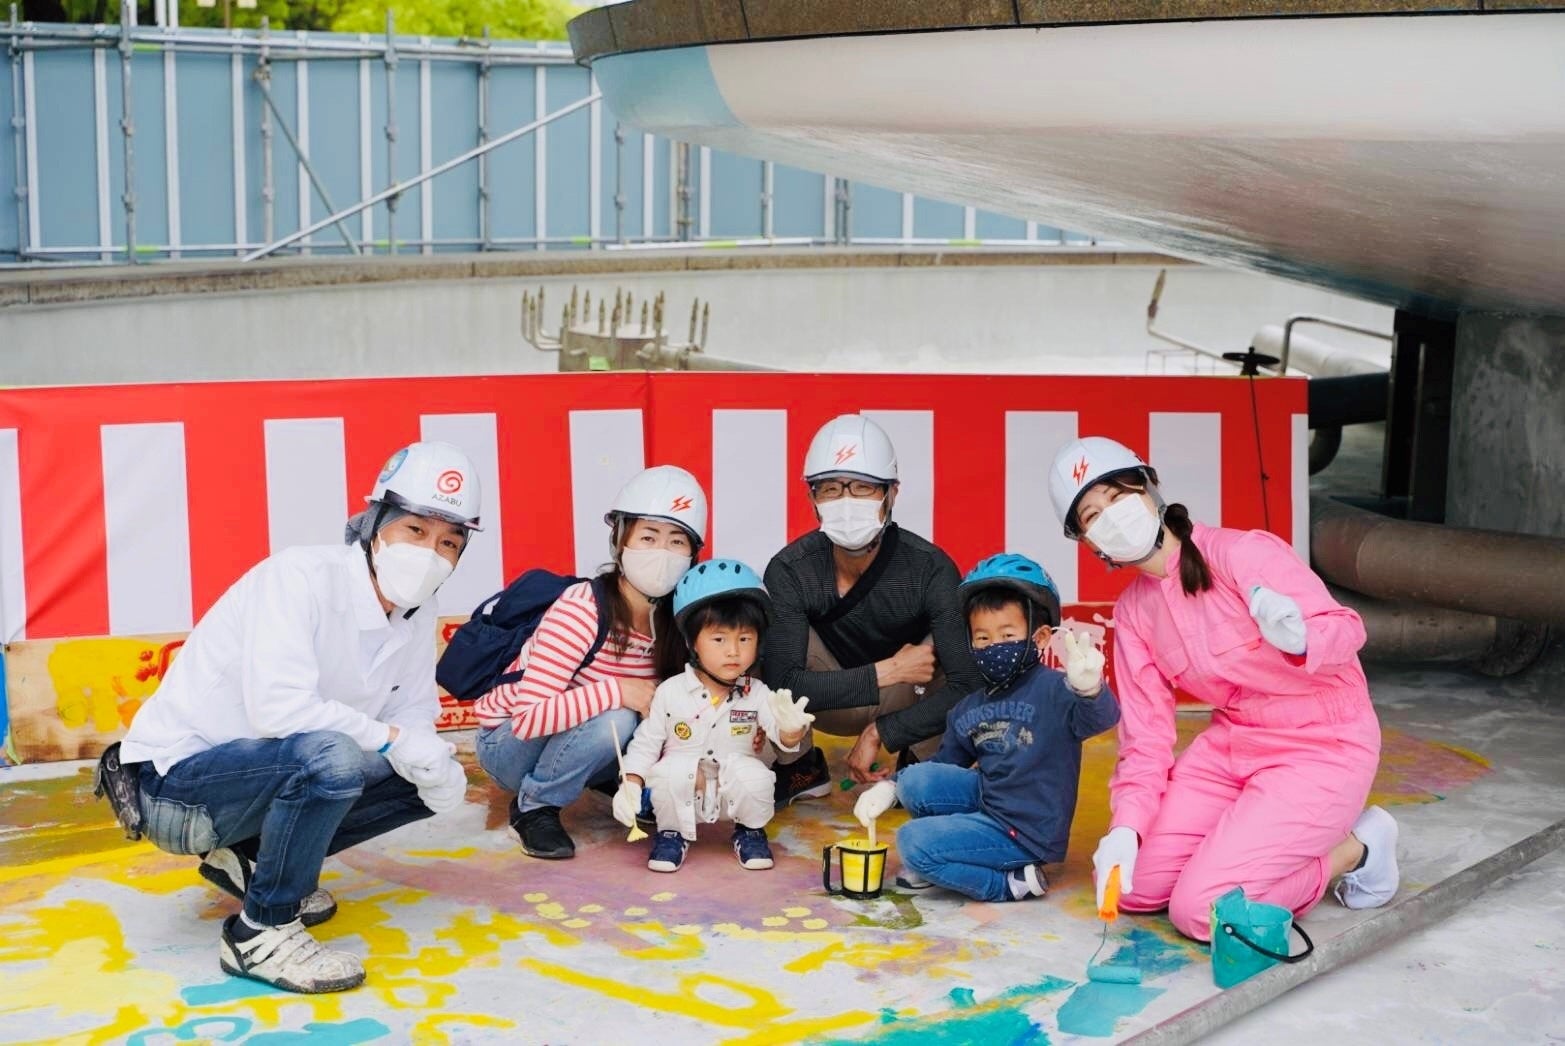 IWAKANが、トランスジェンダーの子どもと家族を映した映画『リトル・ガール』無料上映イベントを開催